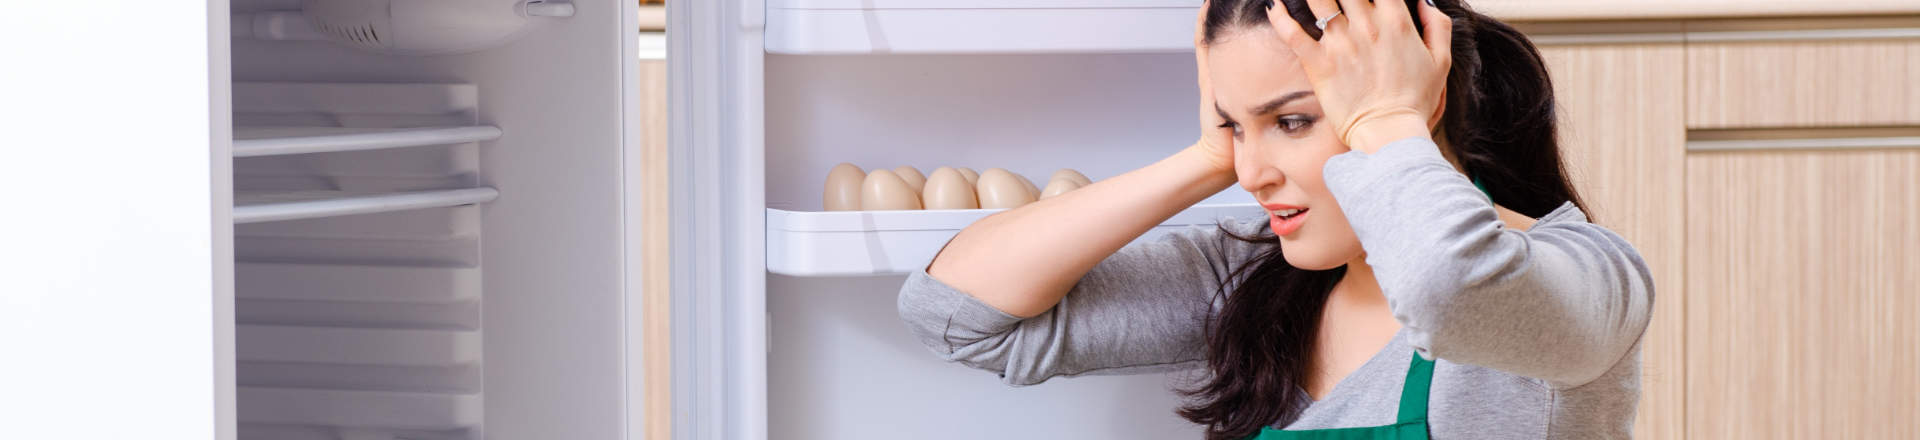 shocked woman clutching her head in front of open fridge